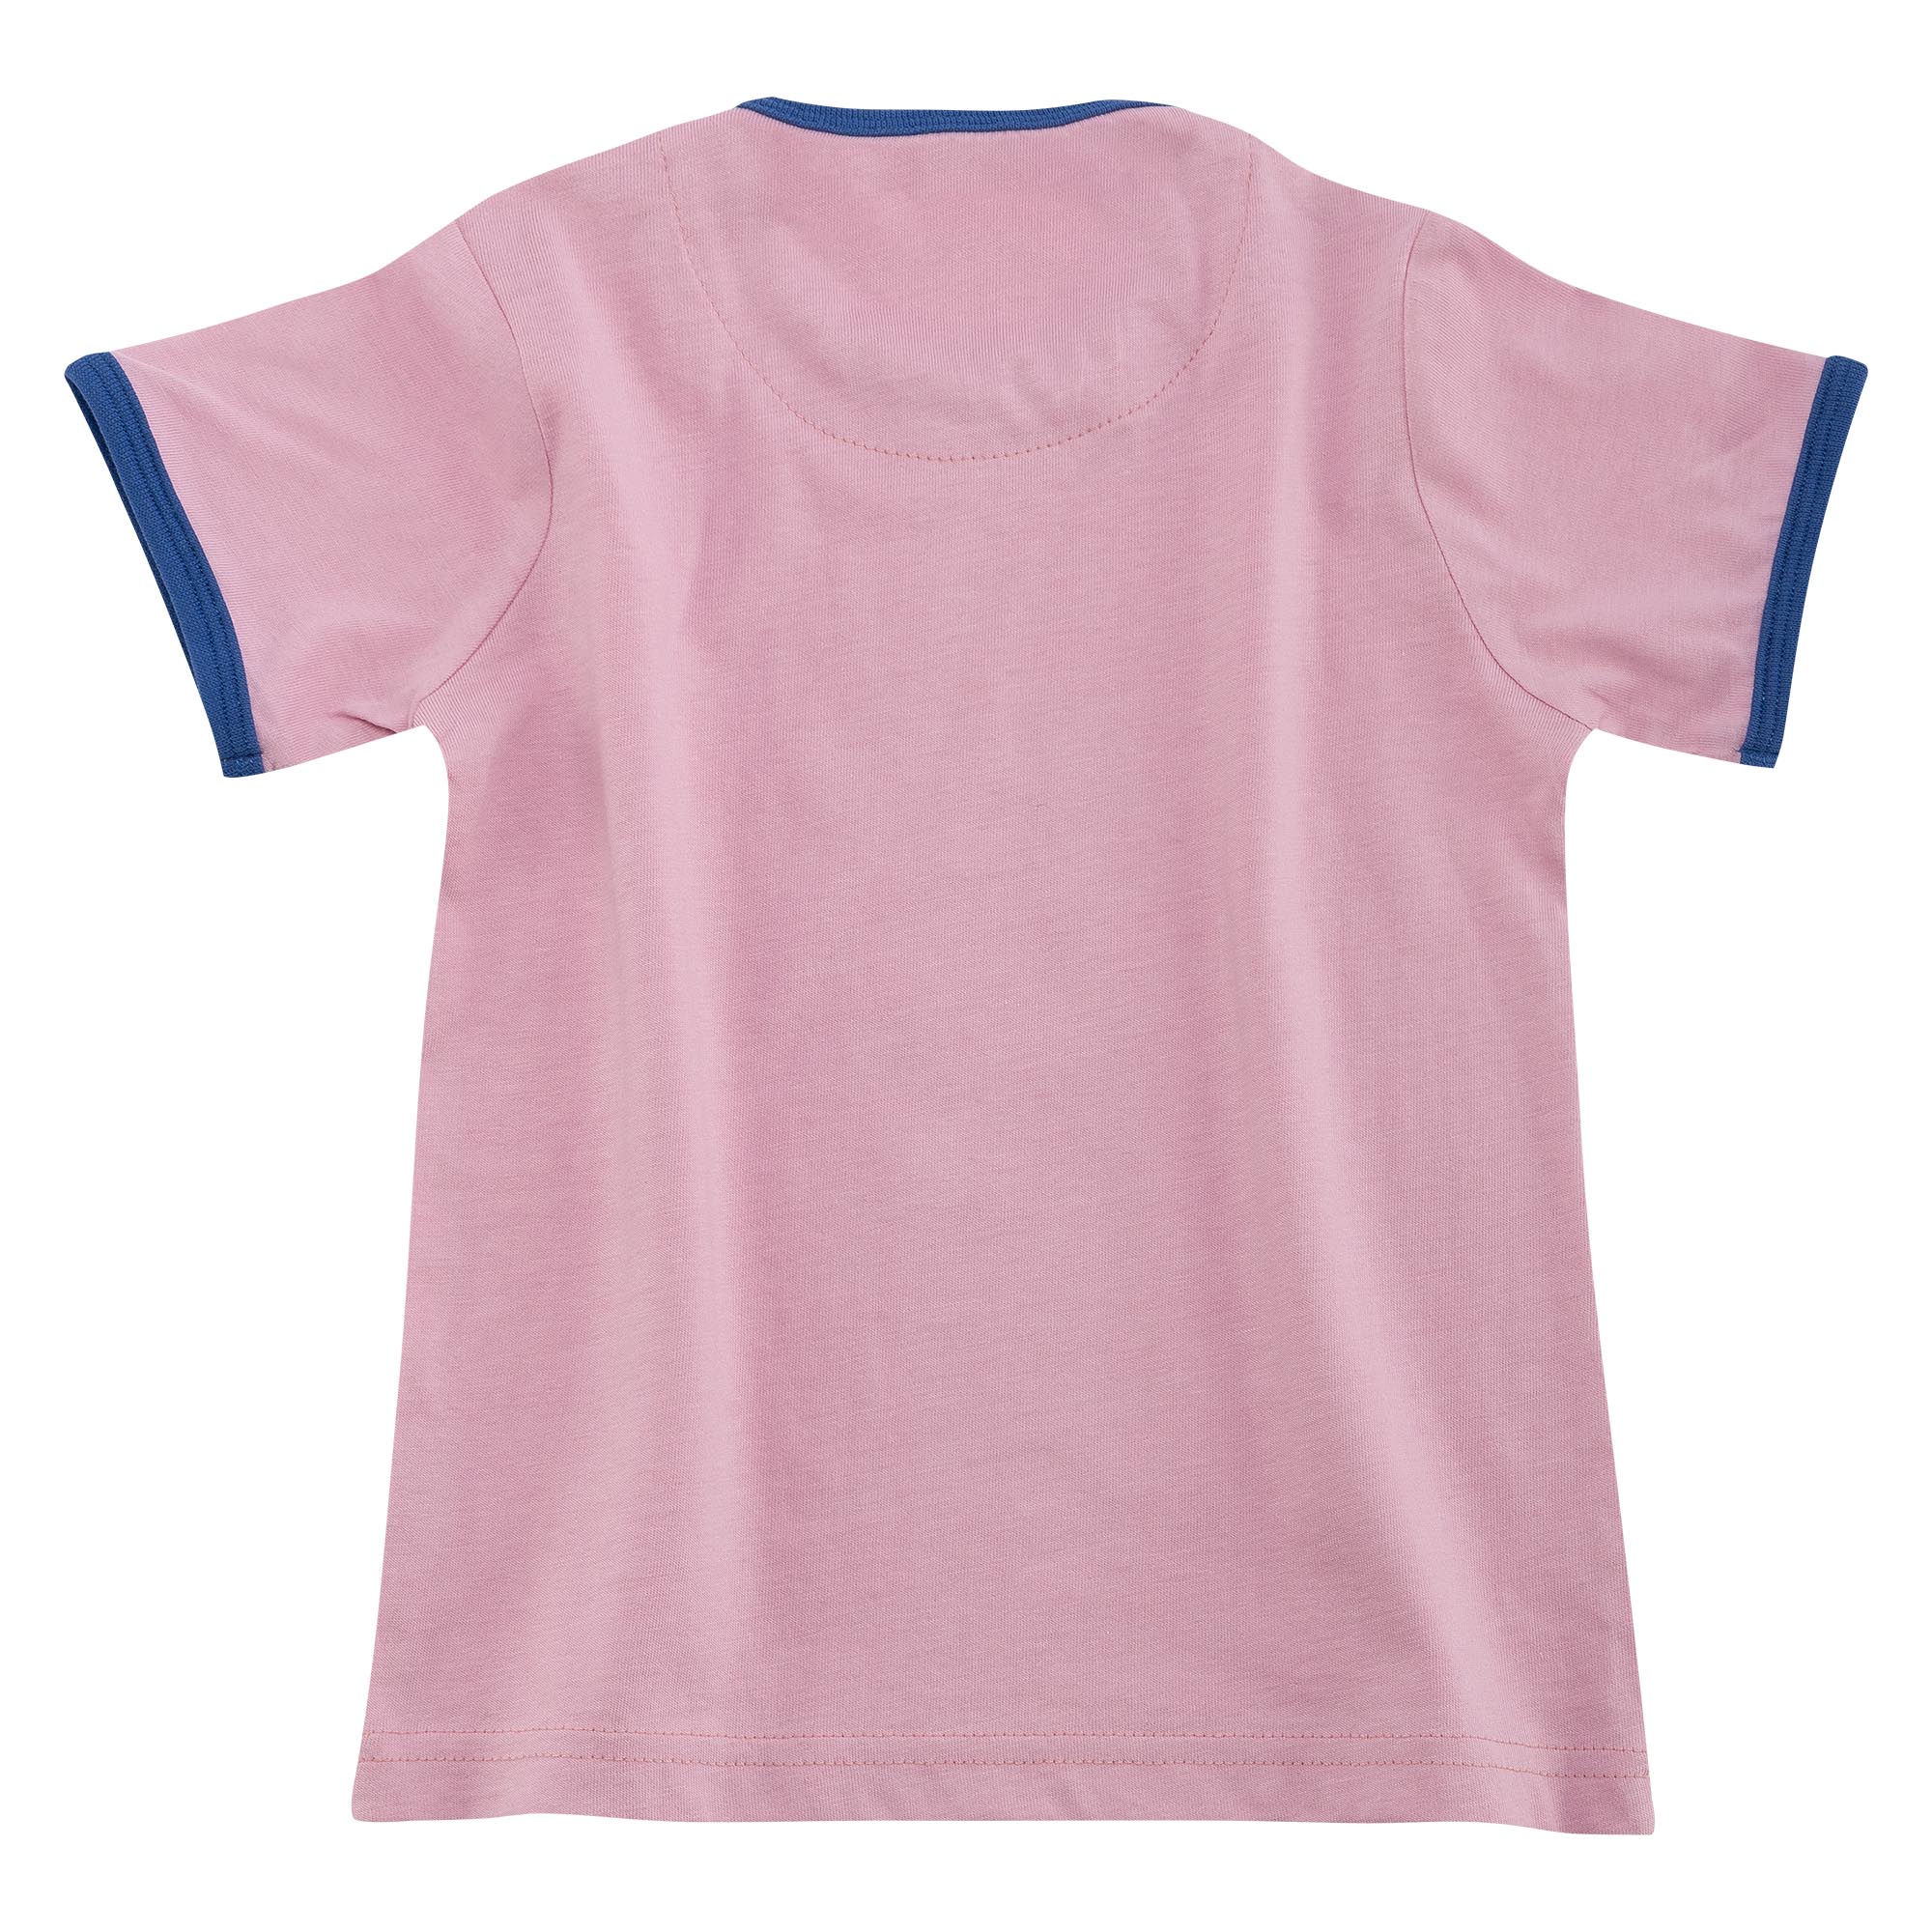 T-Shirt Baby Erwin rosé